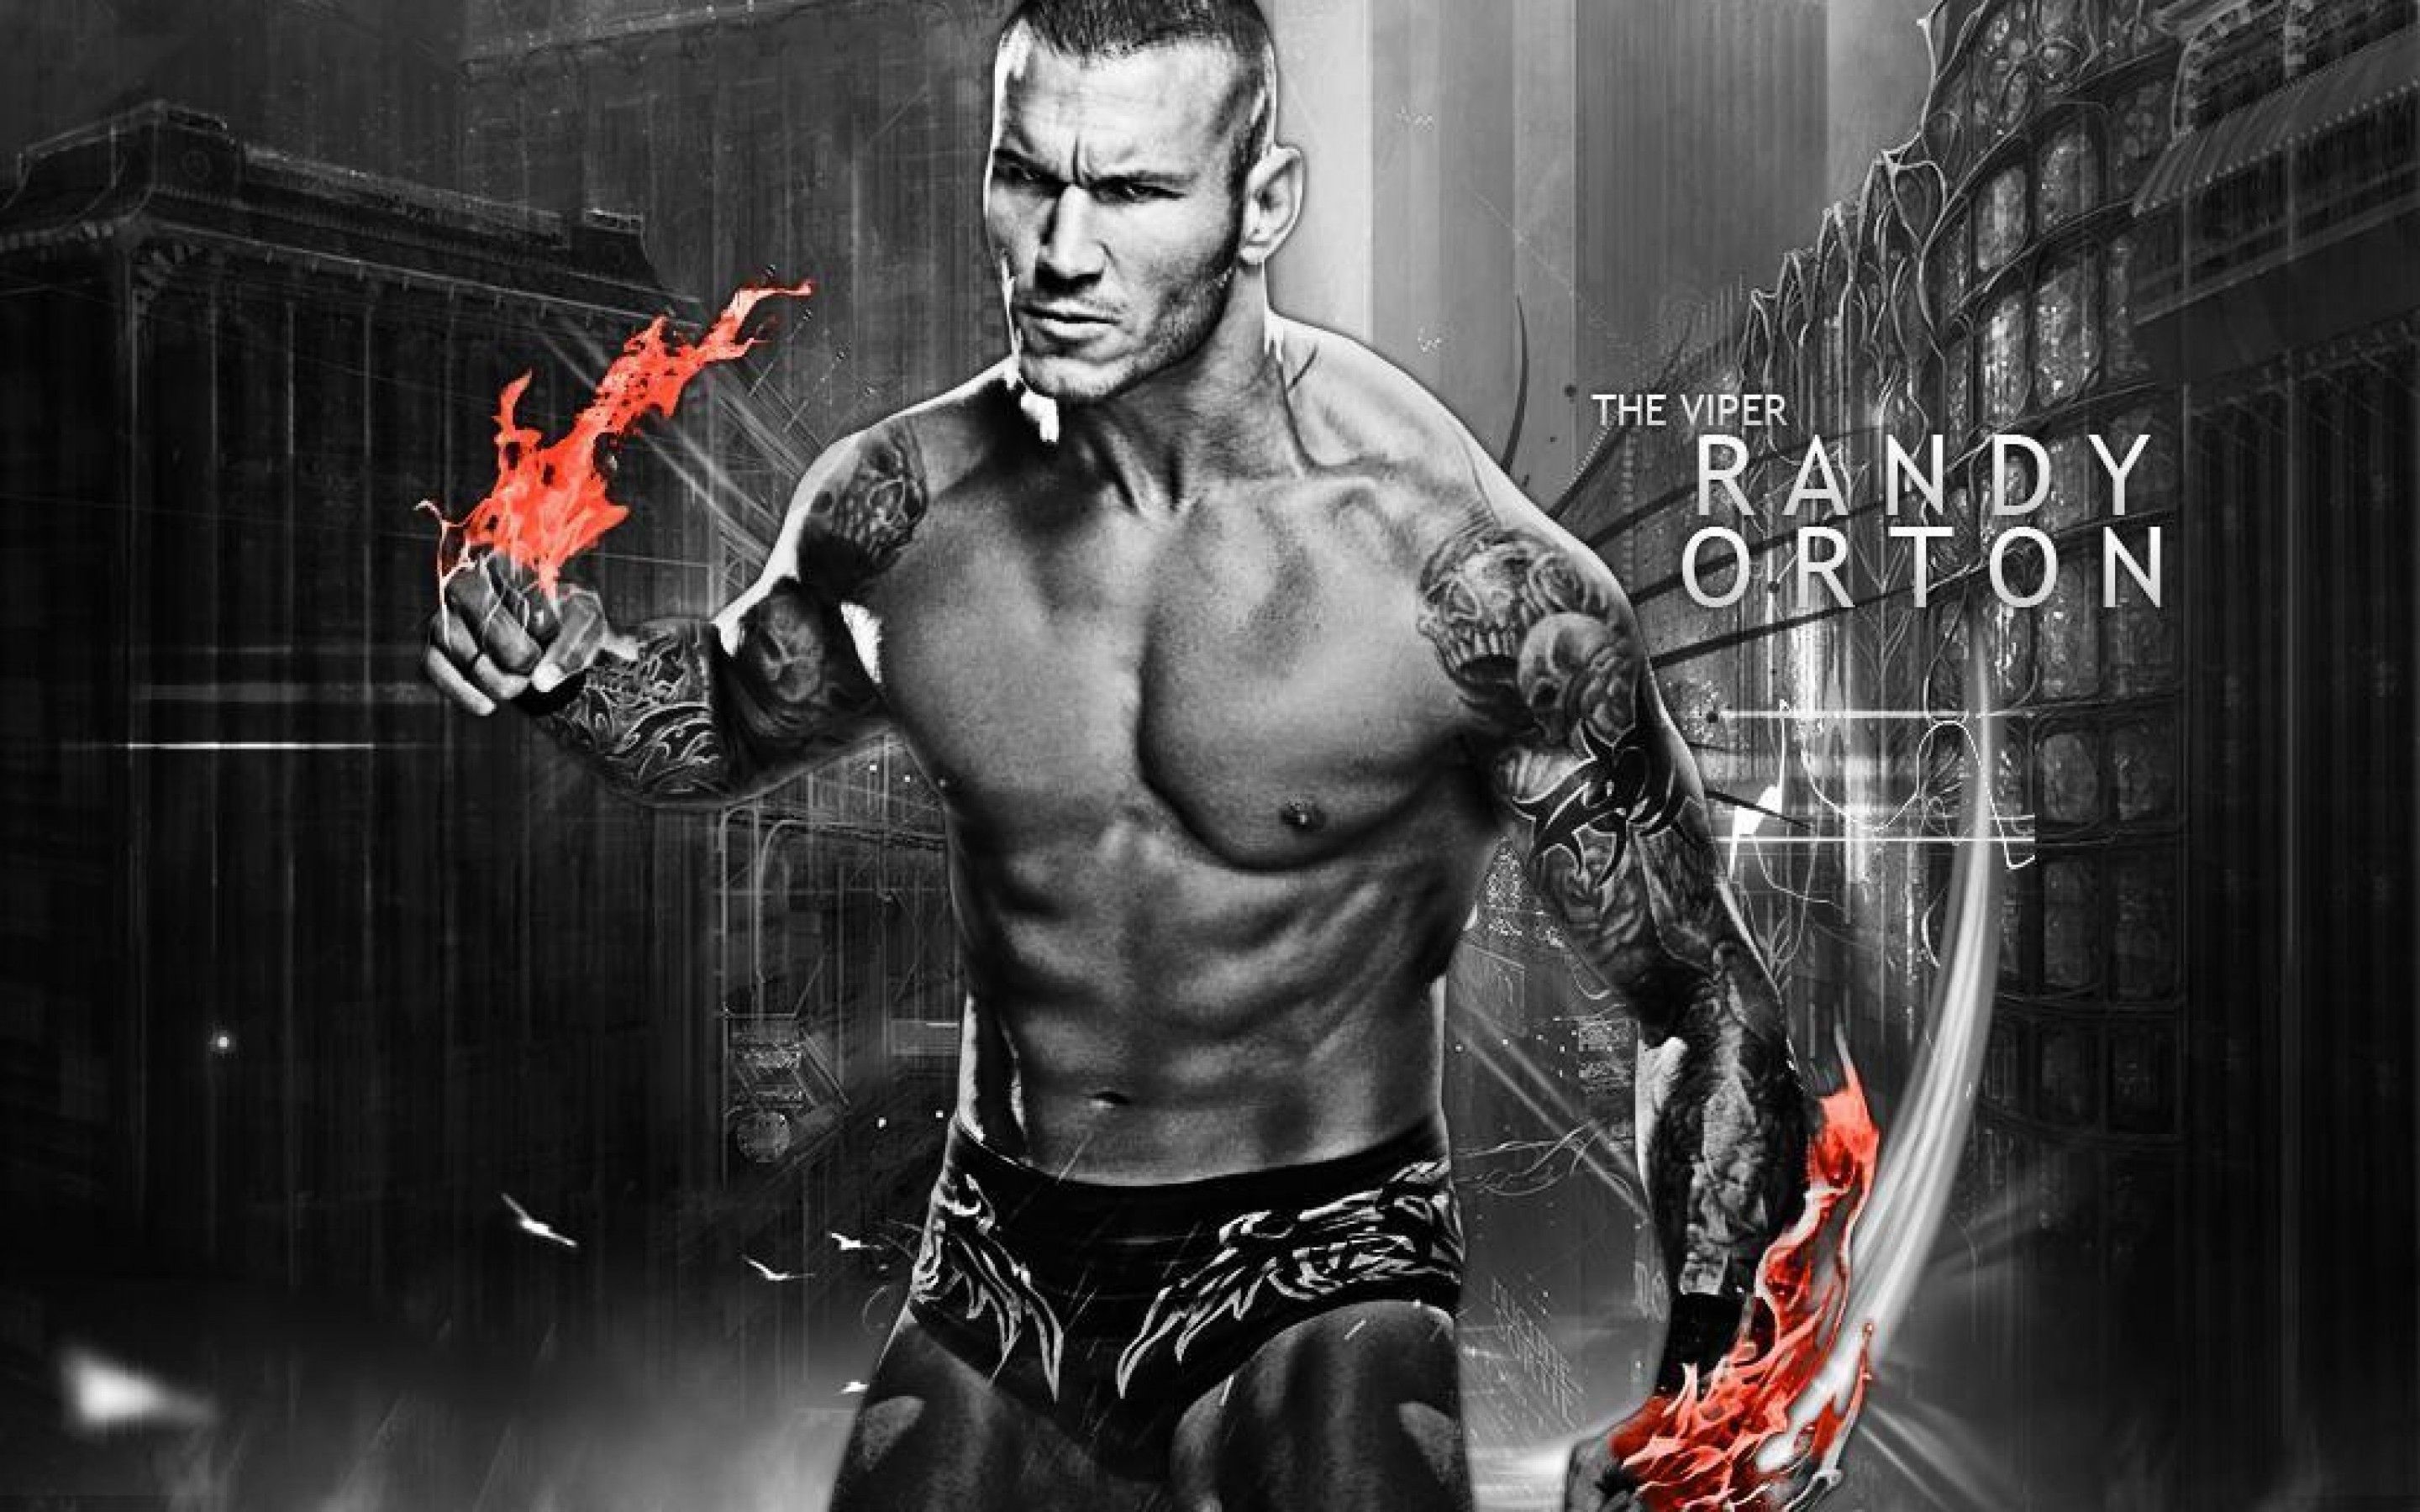 Wwe HD Wallpaper Randy Orton